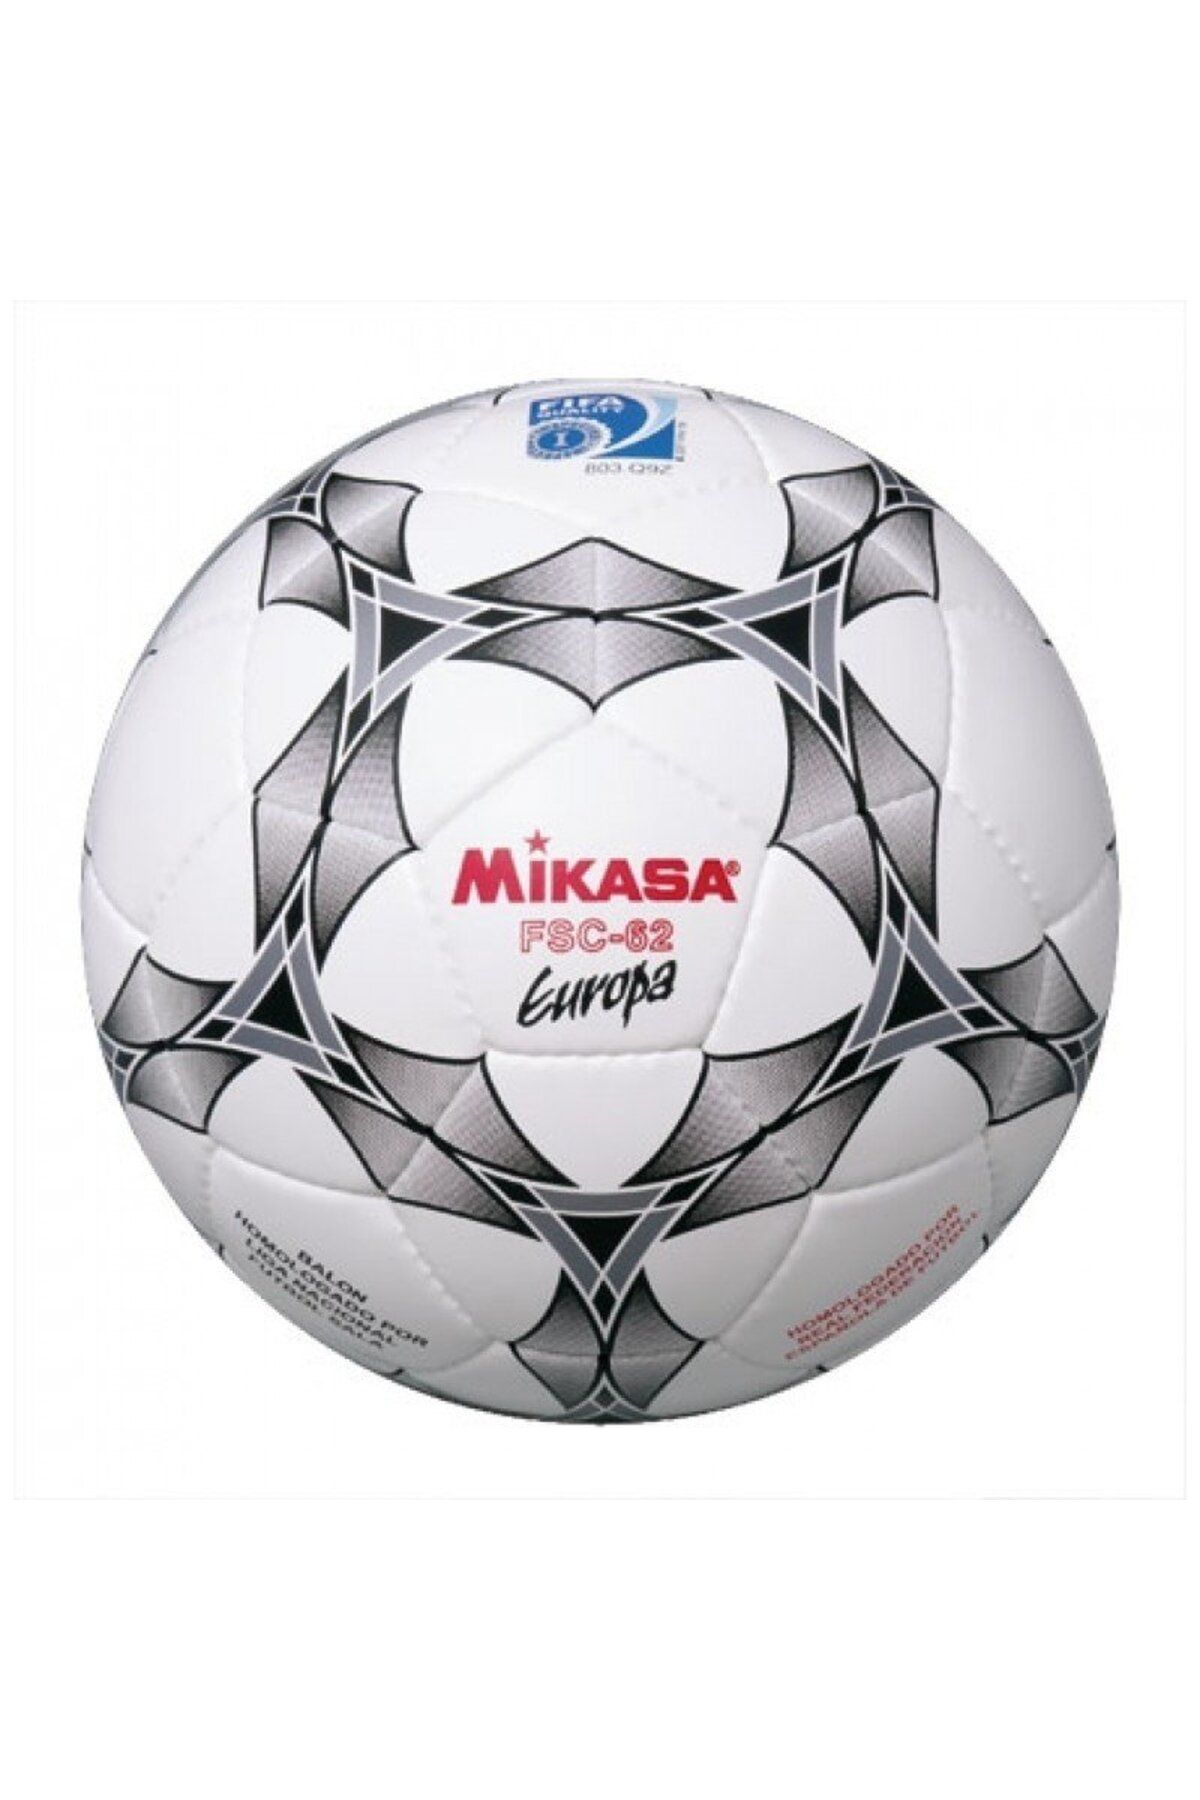 MIKASA Fsc62 Europa Inspected Futsal Topu